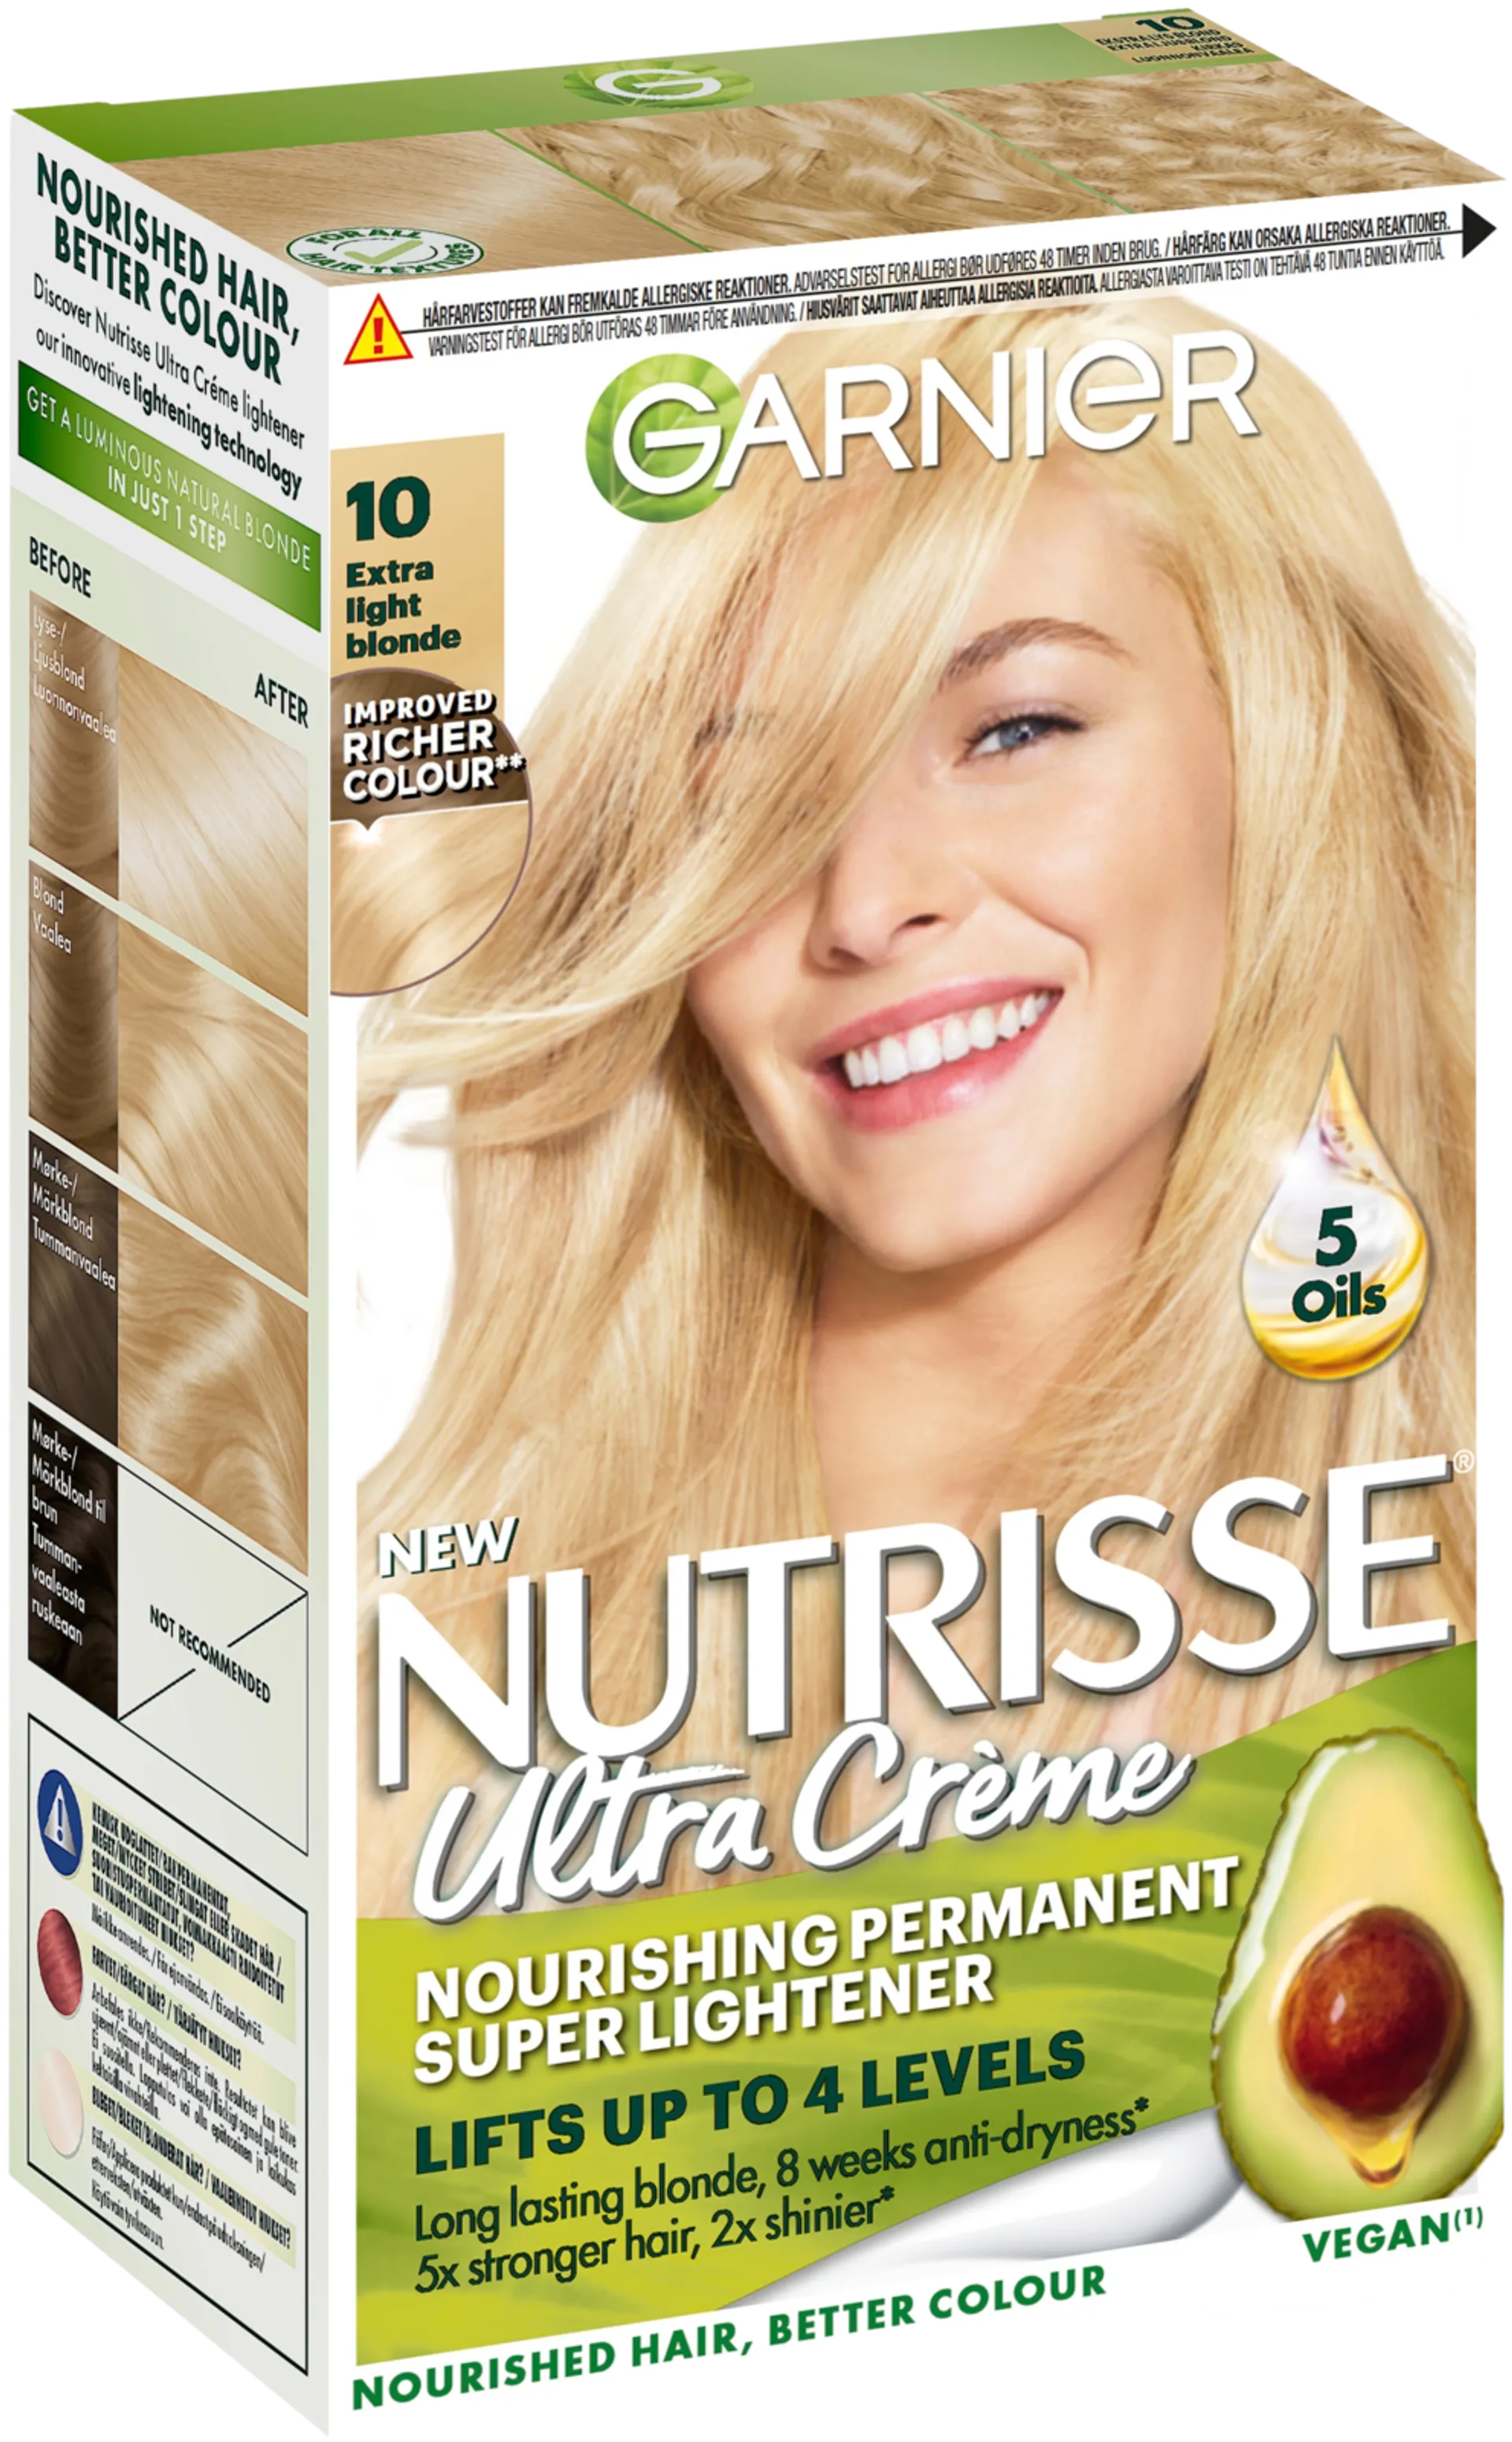 Garnier Nutrisse Ultra Creme 10.0 Extra Ligfht Blonde Erittäin Kirkas vaalea kestoväri 1kpl - 1